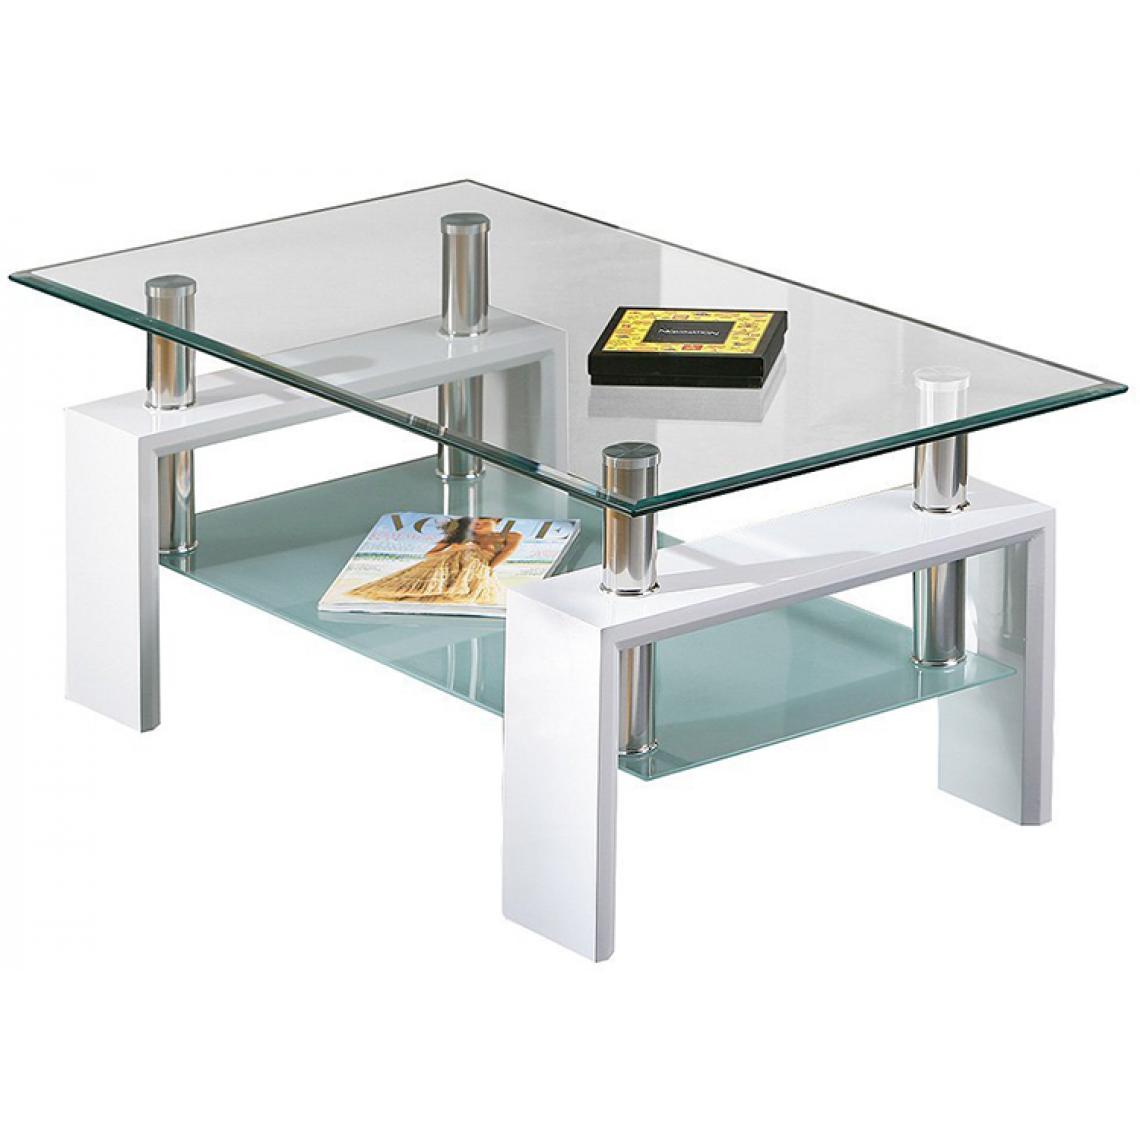 Pegane - Table basse Blanc en métal, Dim : 100 x 60 x 45 cm - Tables basses